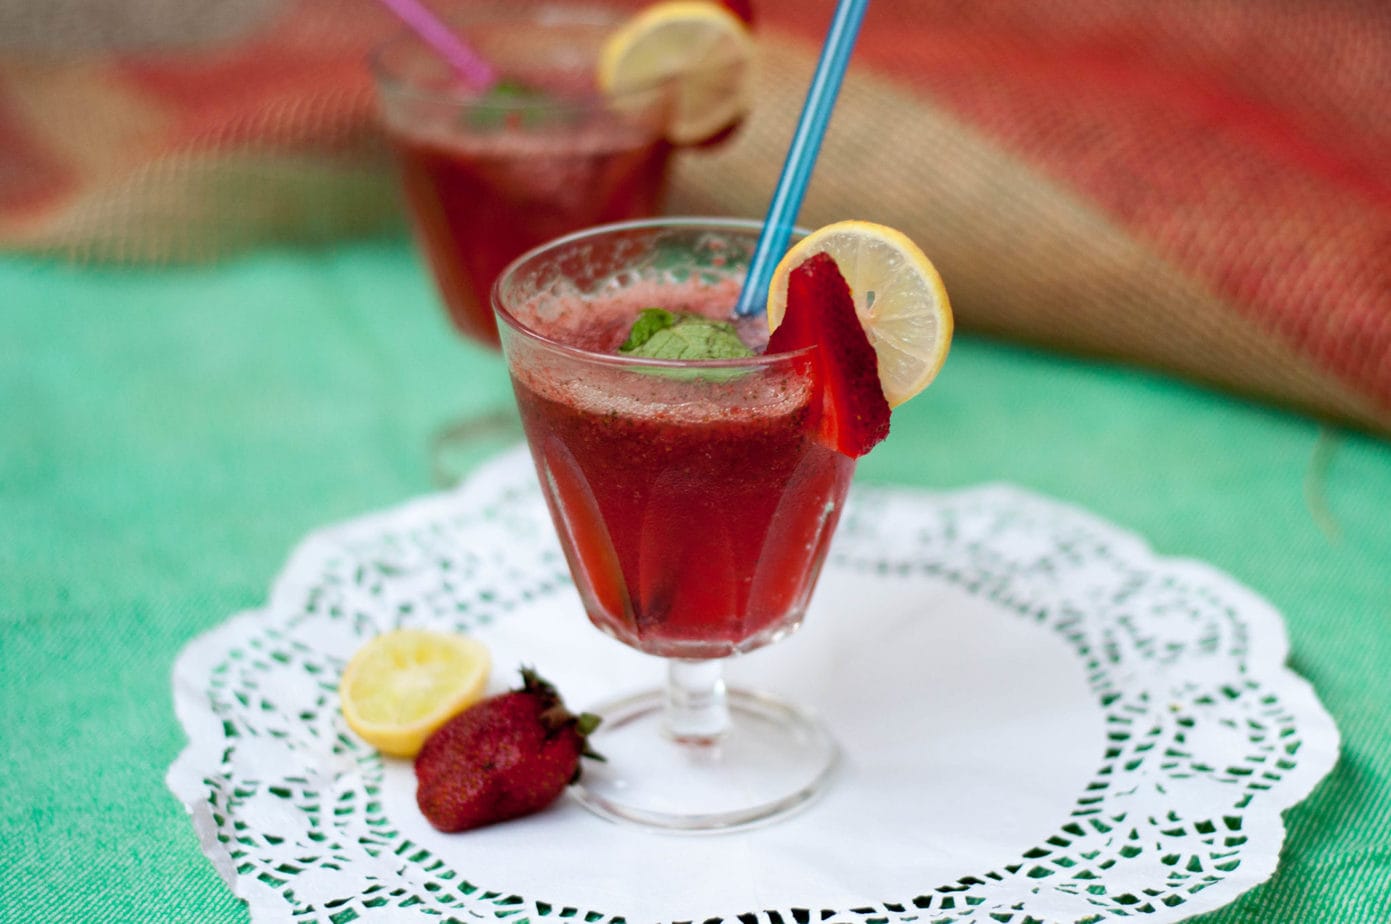 Strawberry mint lemonade is ready to serve.